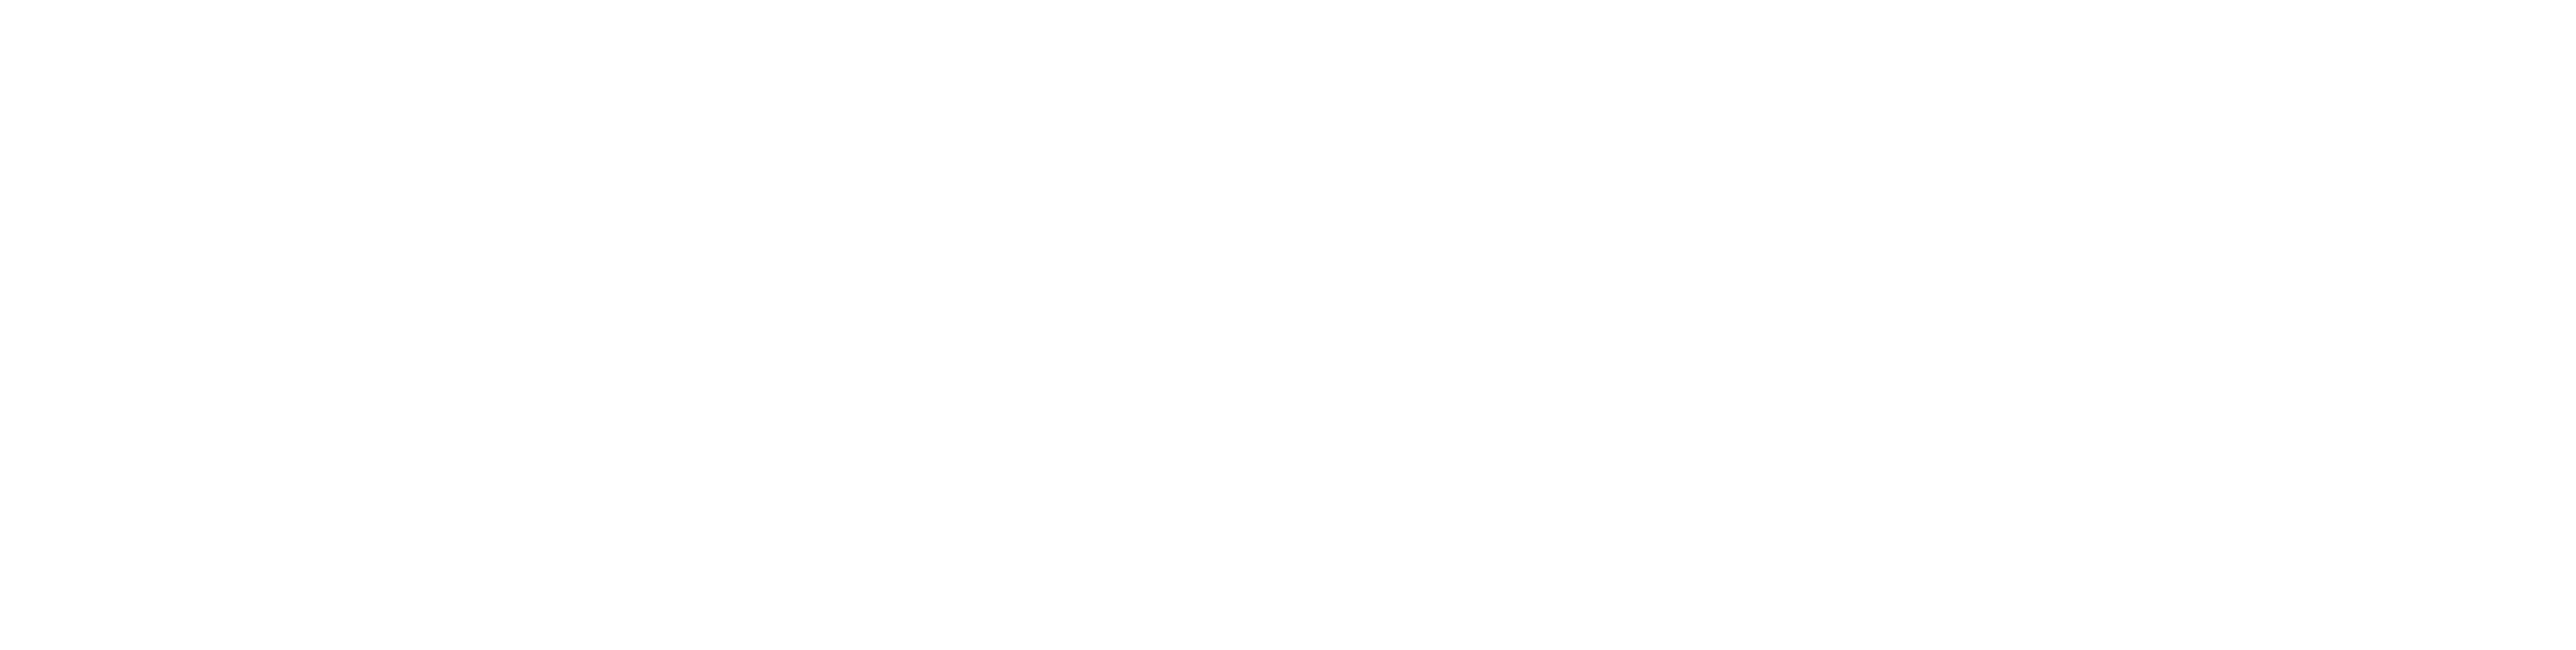 Pragma Capital